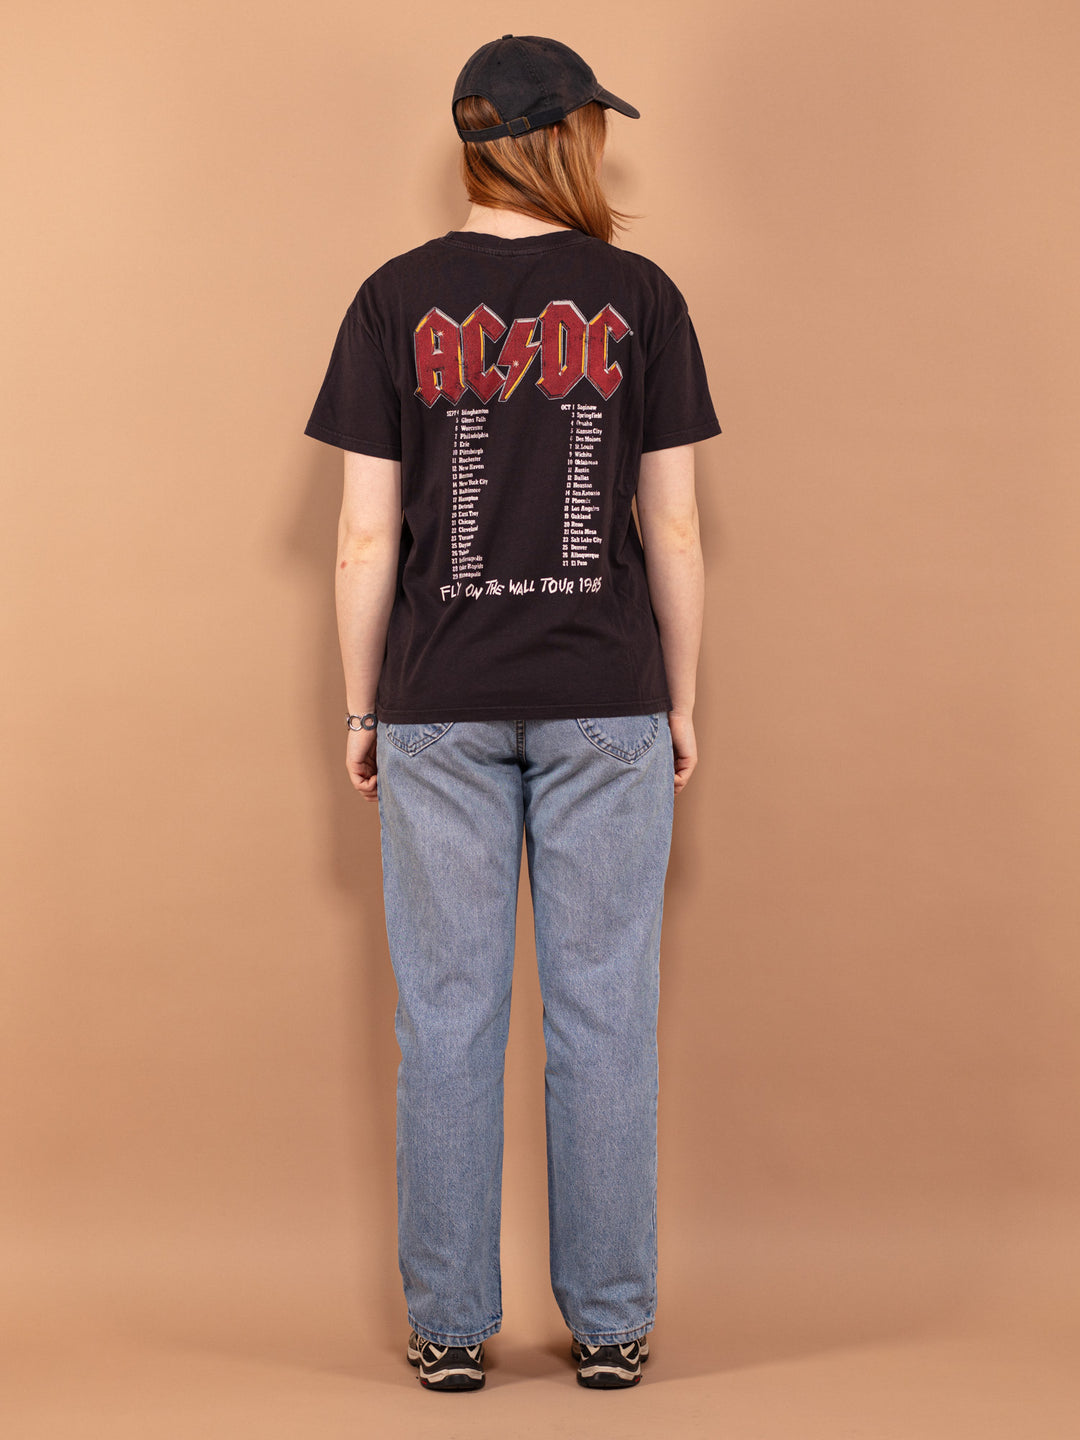 Vintage 90's Women T-shirt with AC/DC print